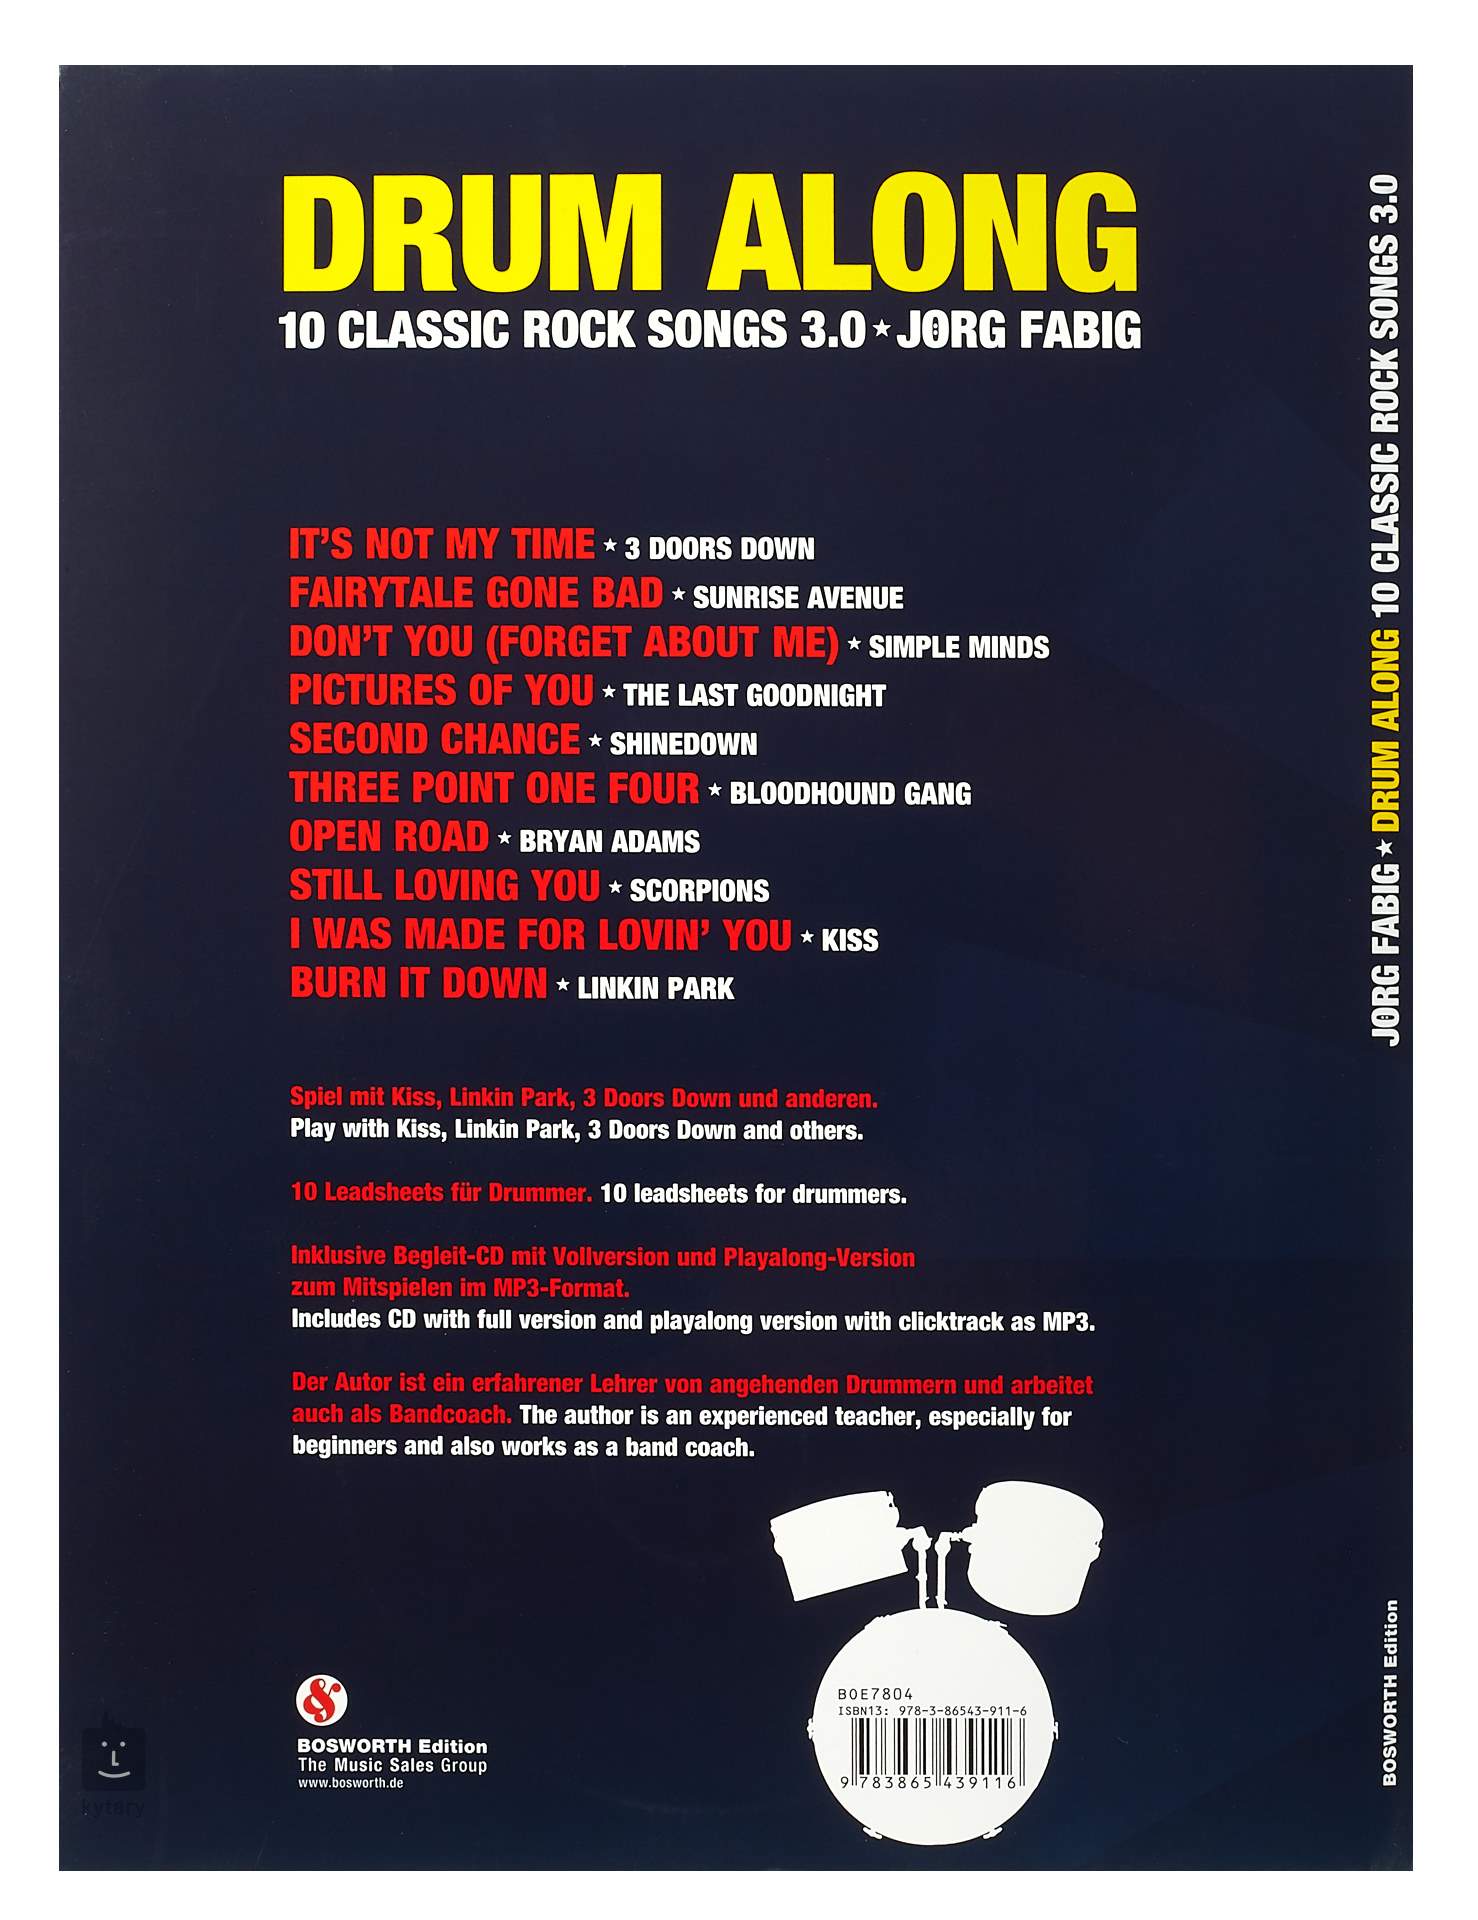 Drum along ix 10 classic rock songs 3.0 cd 